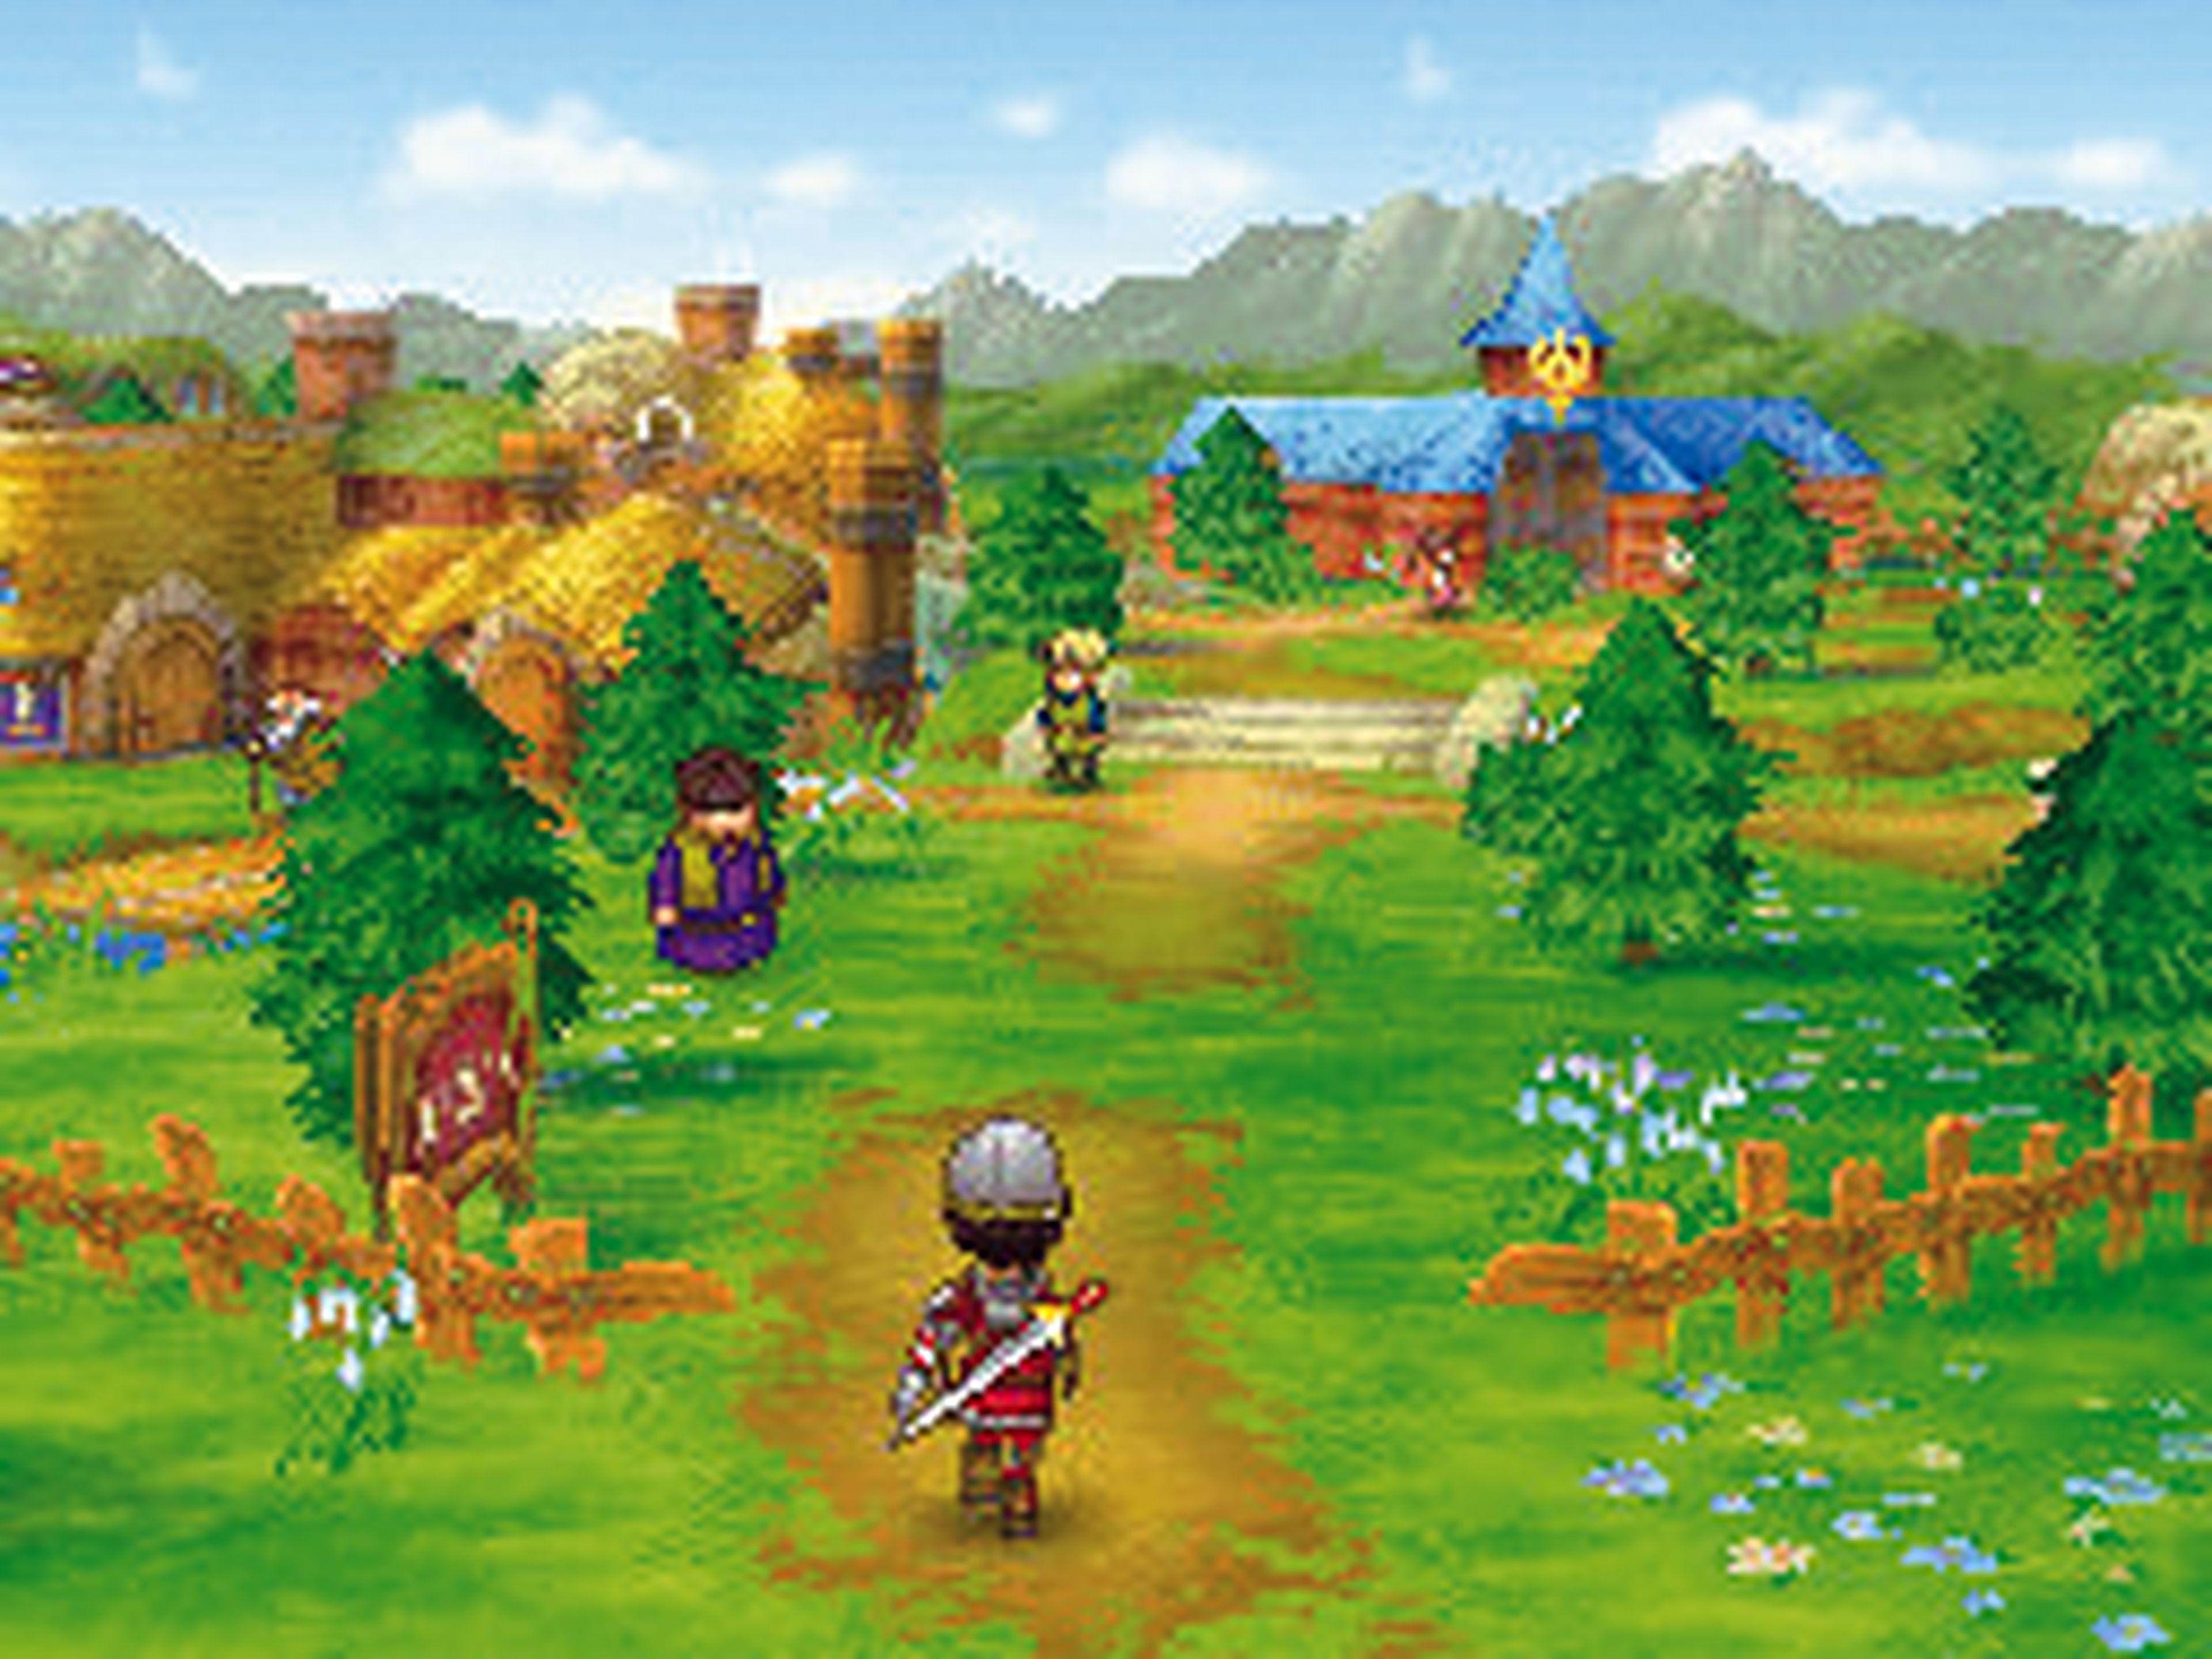 Dragon Quest IX sale el 23 de julio